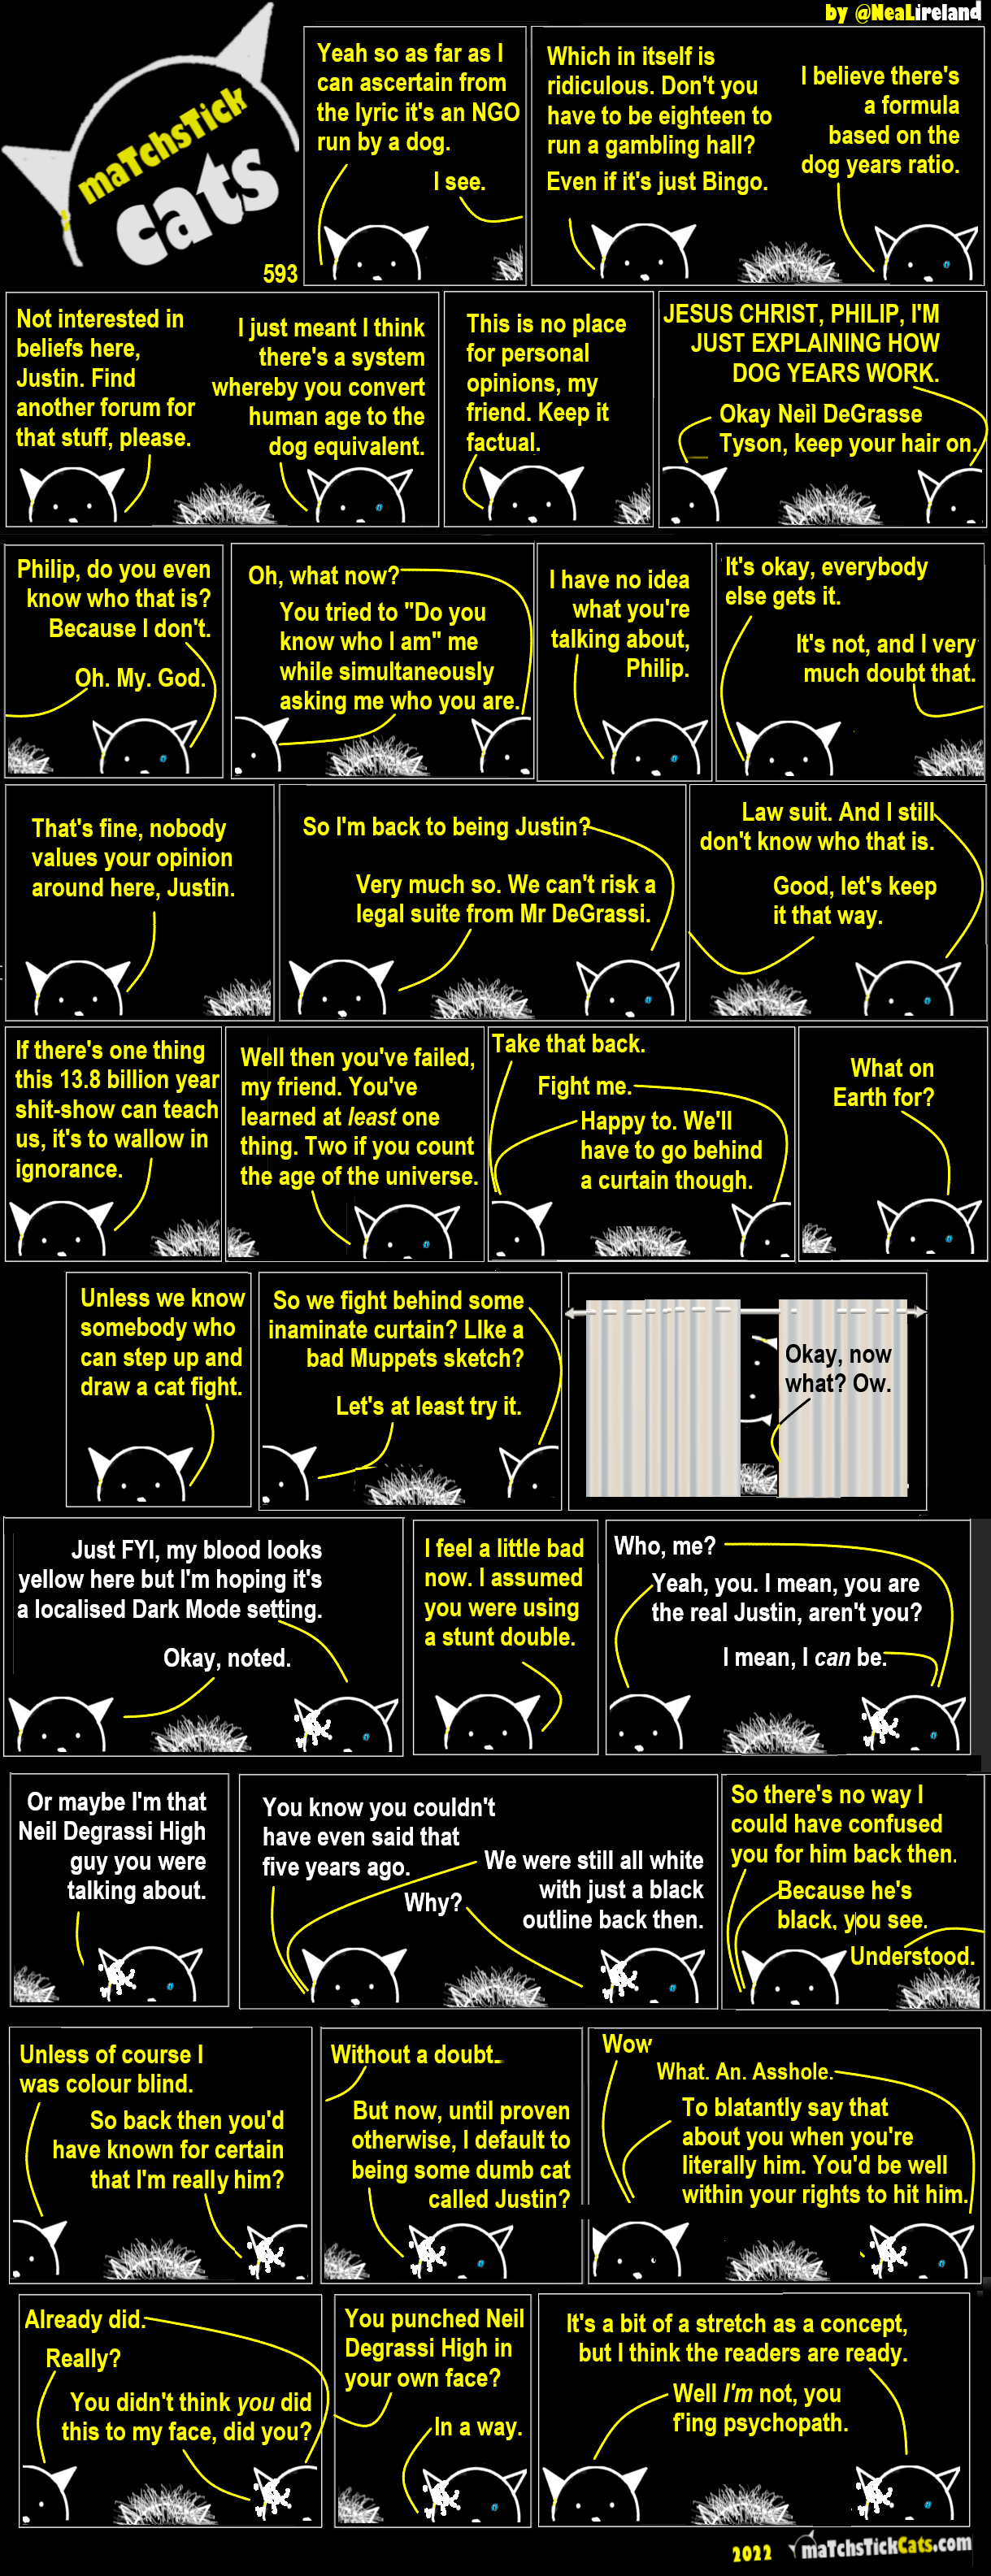 Neil Degrassi High- Matchstick Cats the Webcomic no. 593